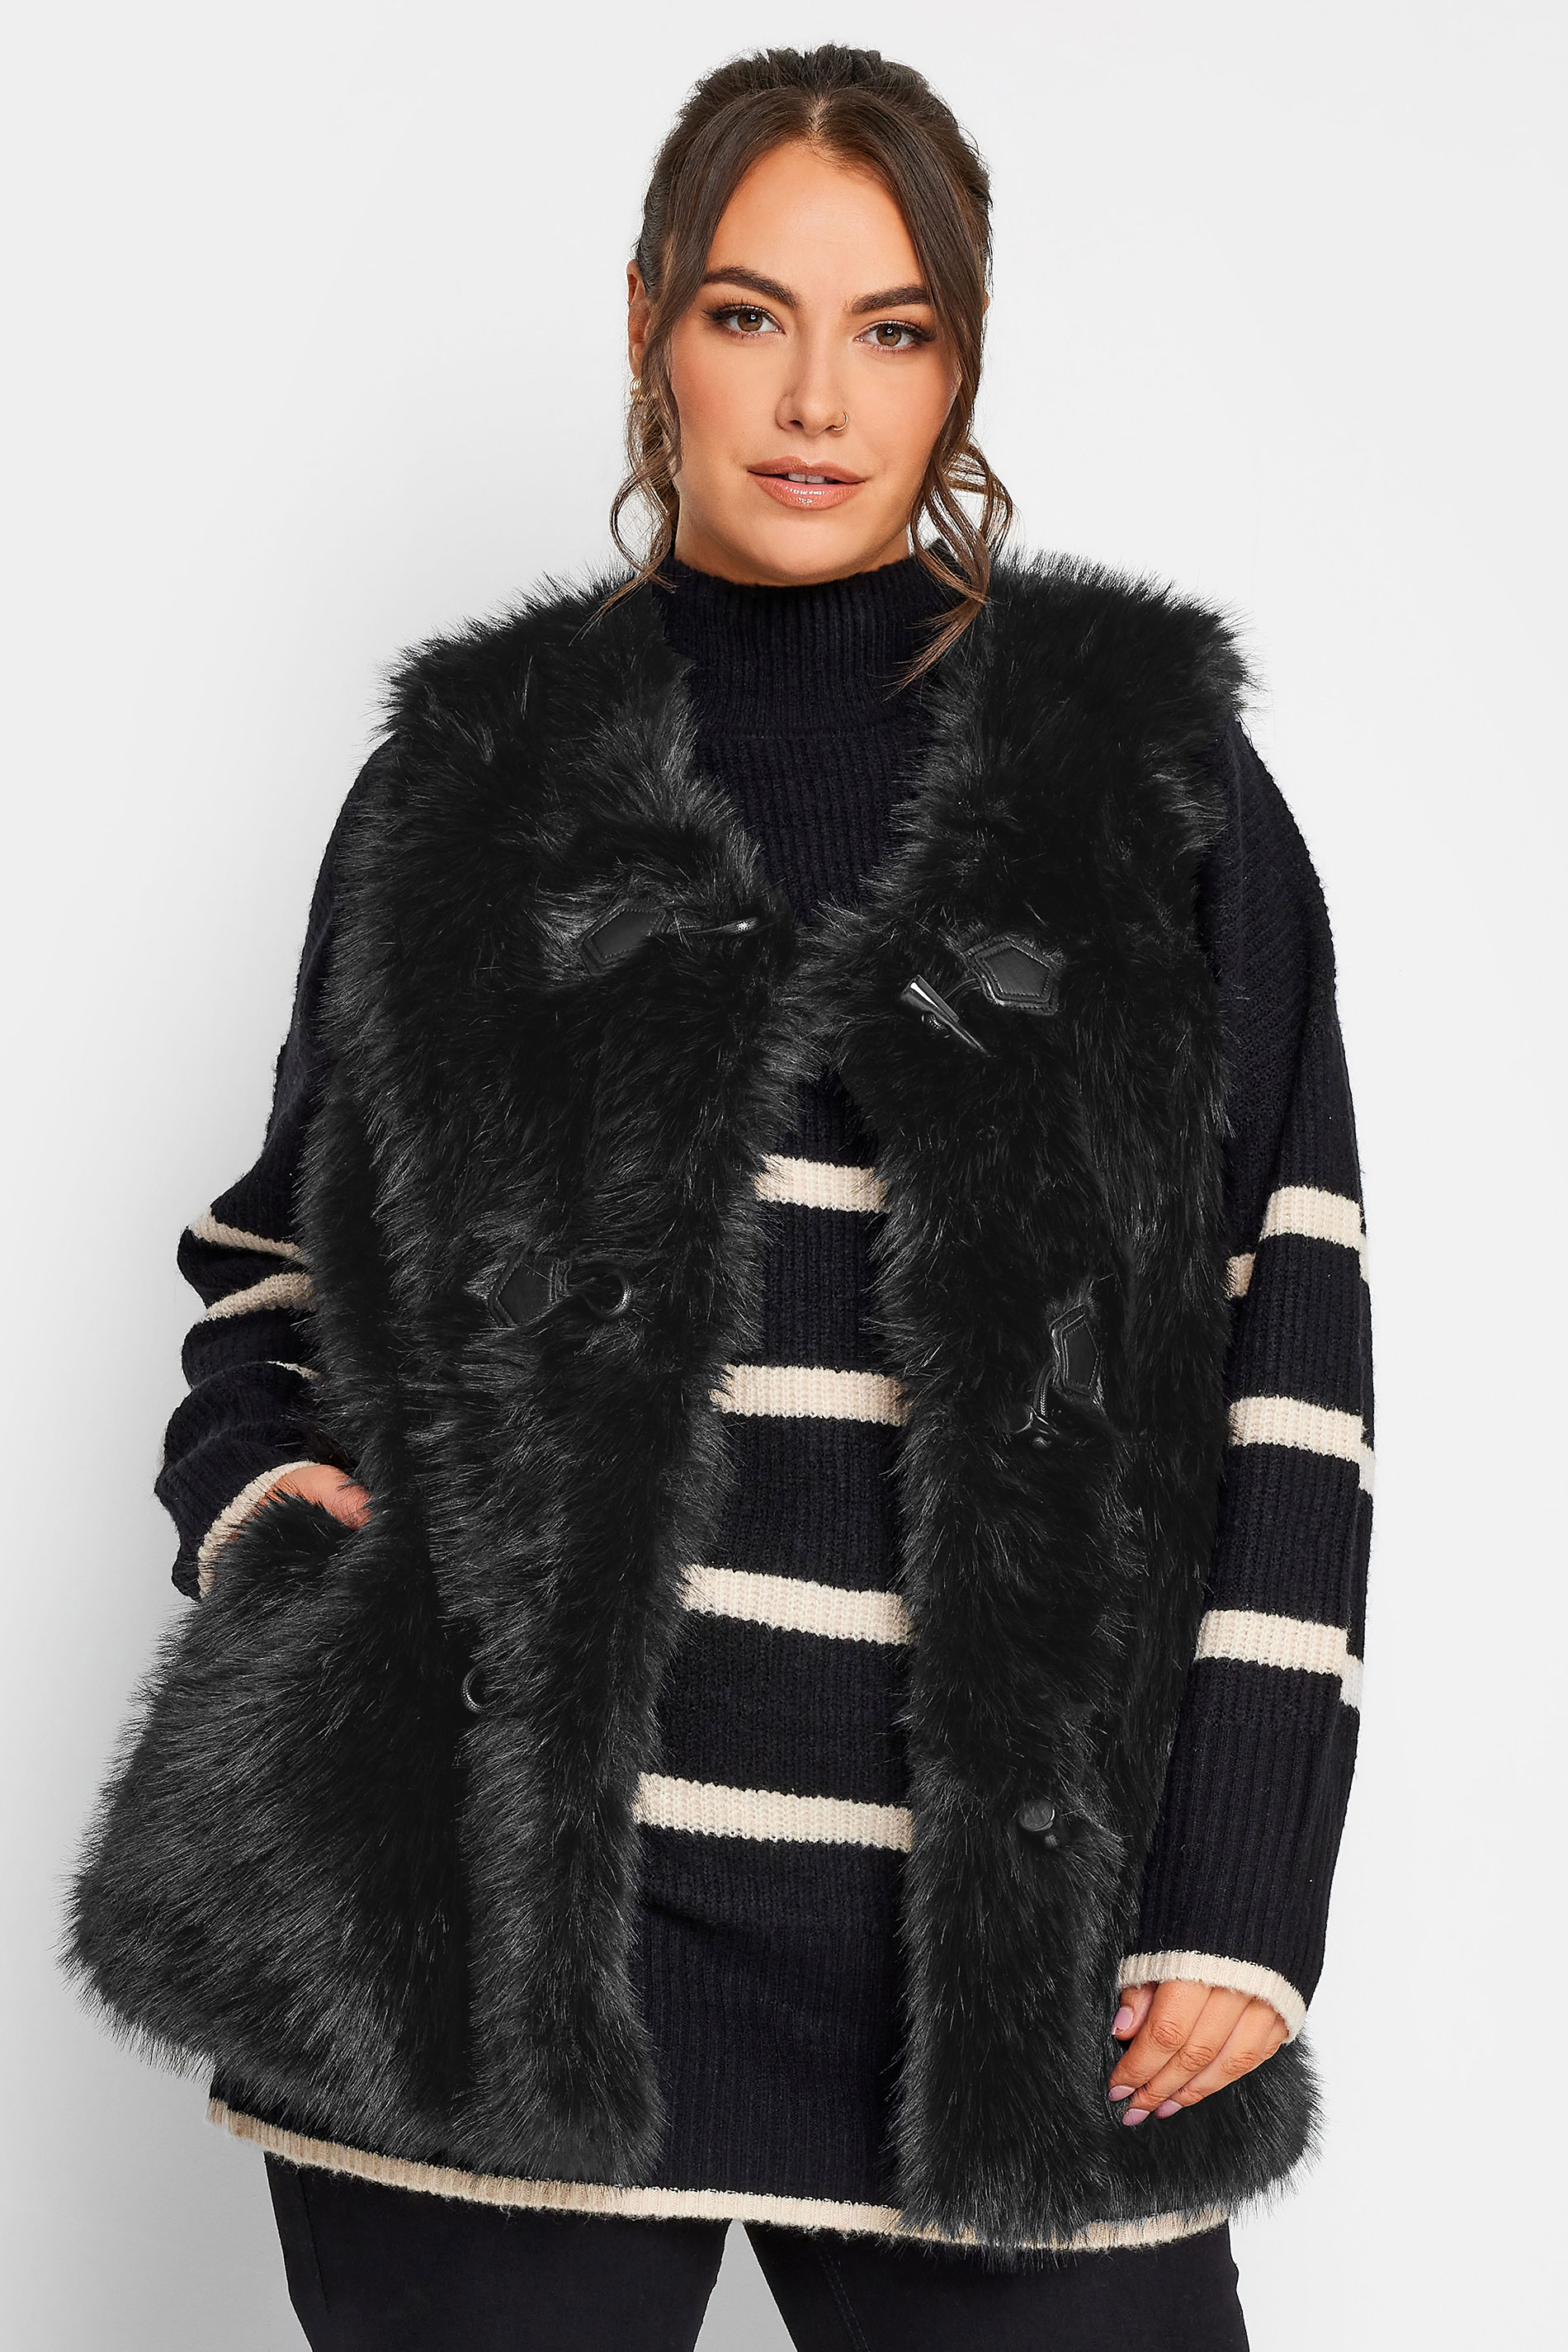 YOURS Plus Size Black Faux Fur Gilet | Yours Clothing 1